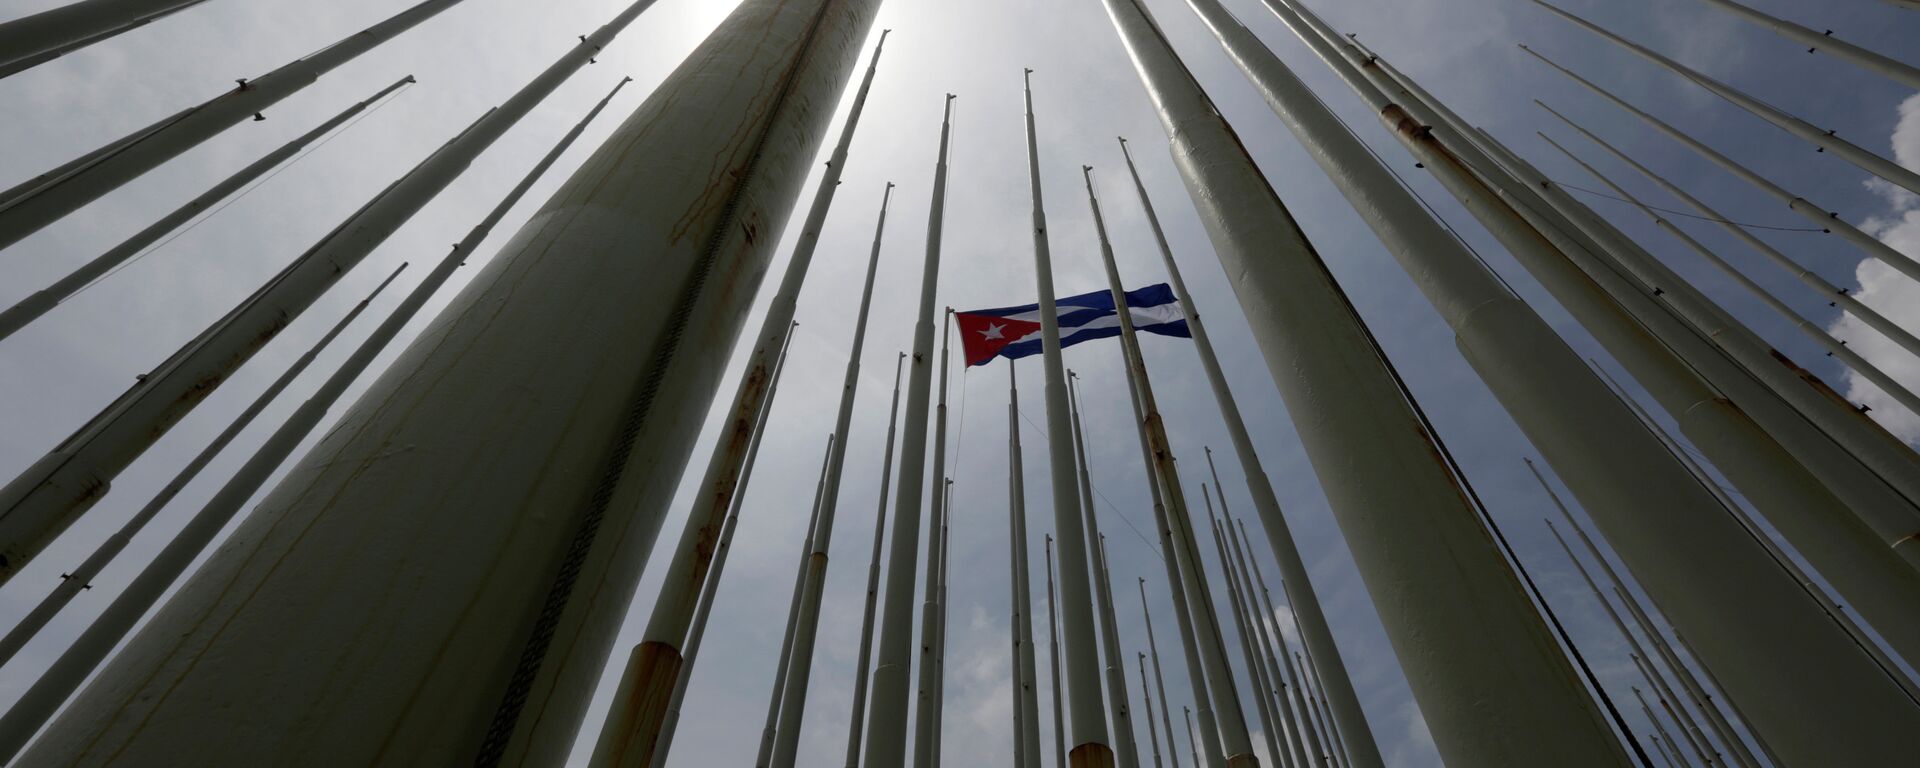 Bandera de Cuba frente de la embajada de EEUU en La Habana - Sputnik Mundo, 1920, 05.06.2021